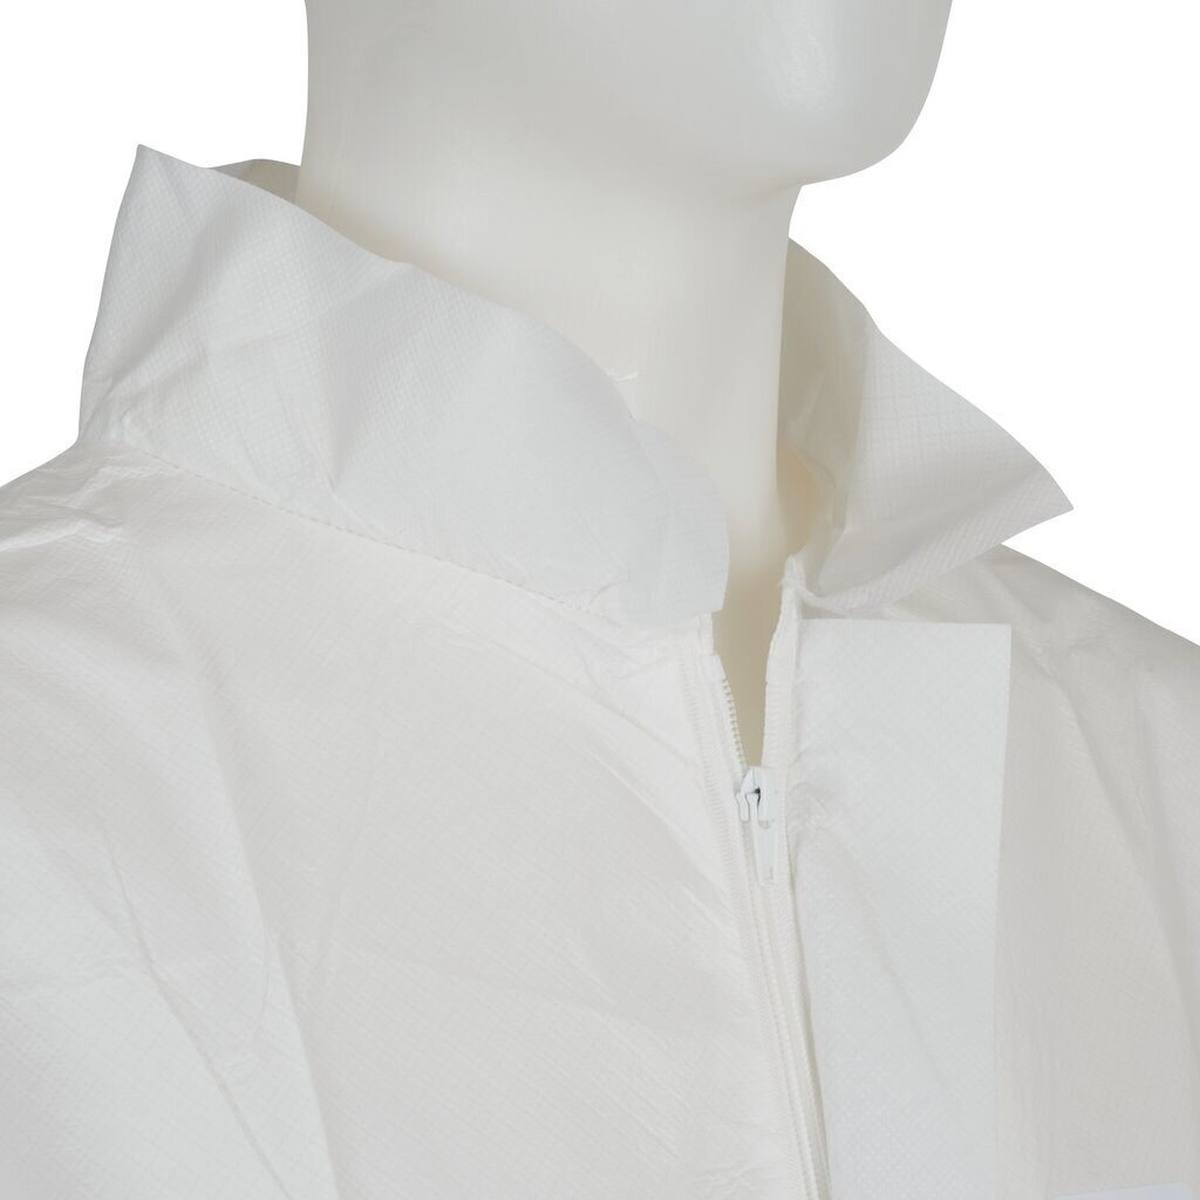 3M 4440 Abrigo, blanco, talla 2XL, especialmente transpirable, muy ligero, con cremallera, puños de punto